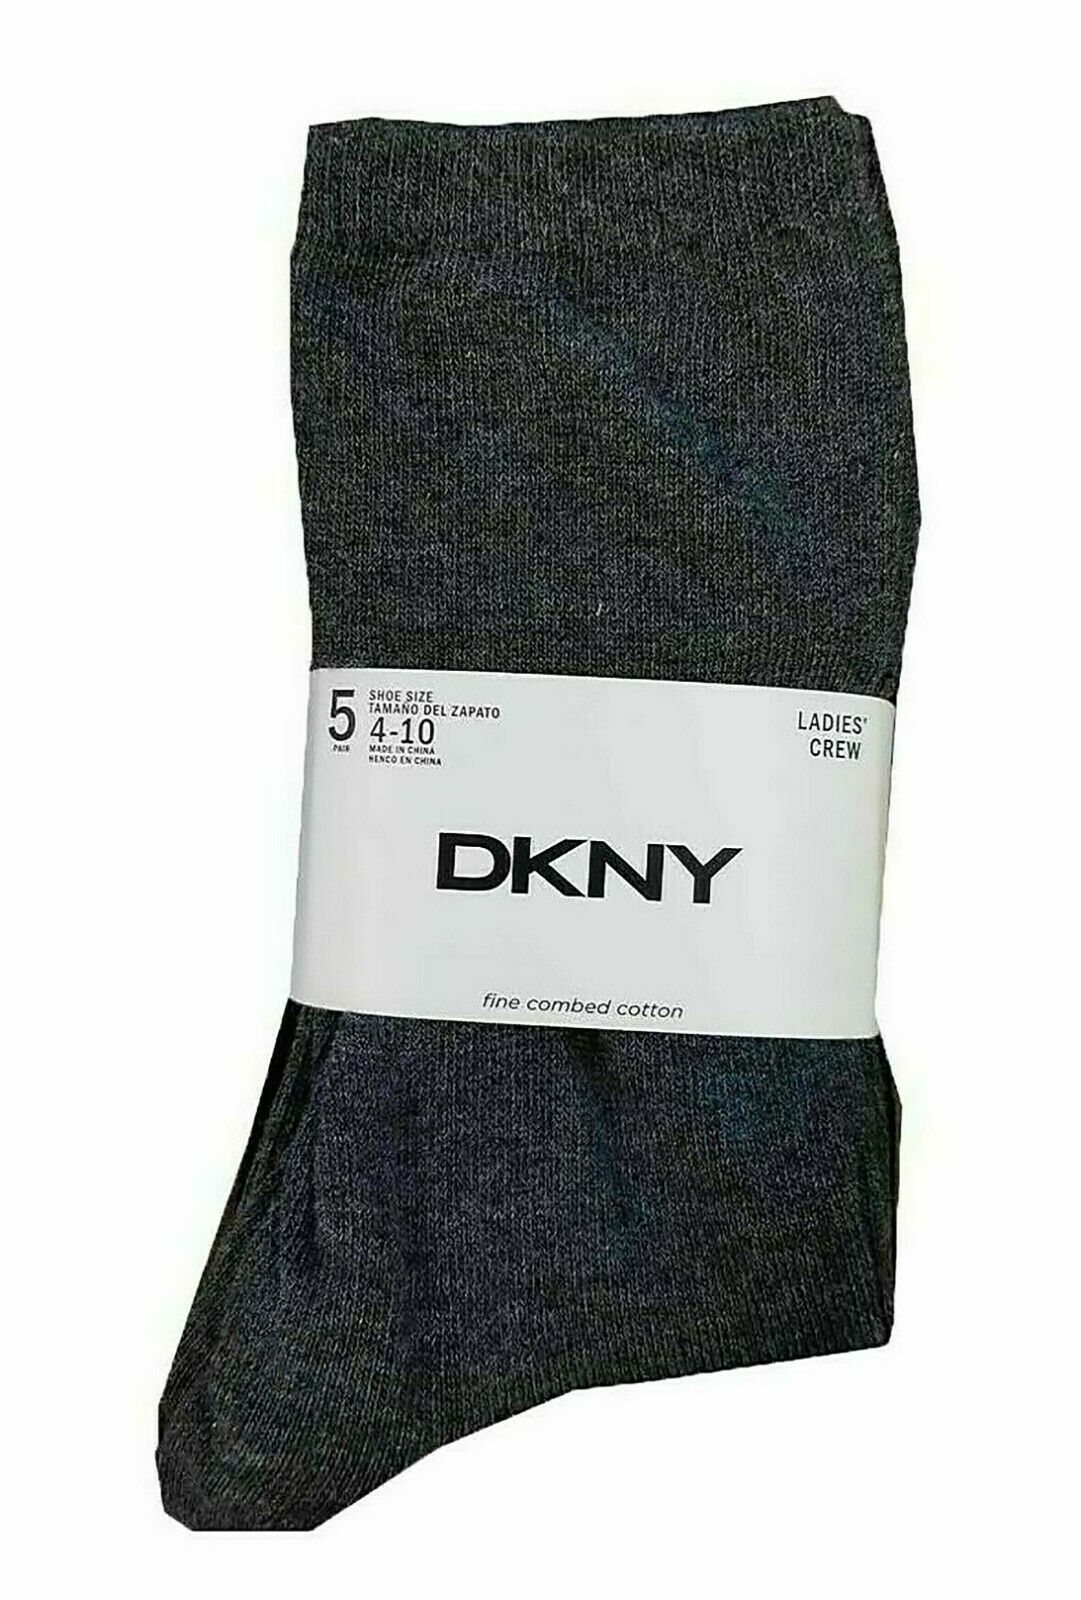 DKNY Women's Fine Combed Cotton Crew Socks 4 Pairs, BLACK-GREY, 4-10 ...